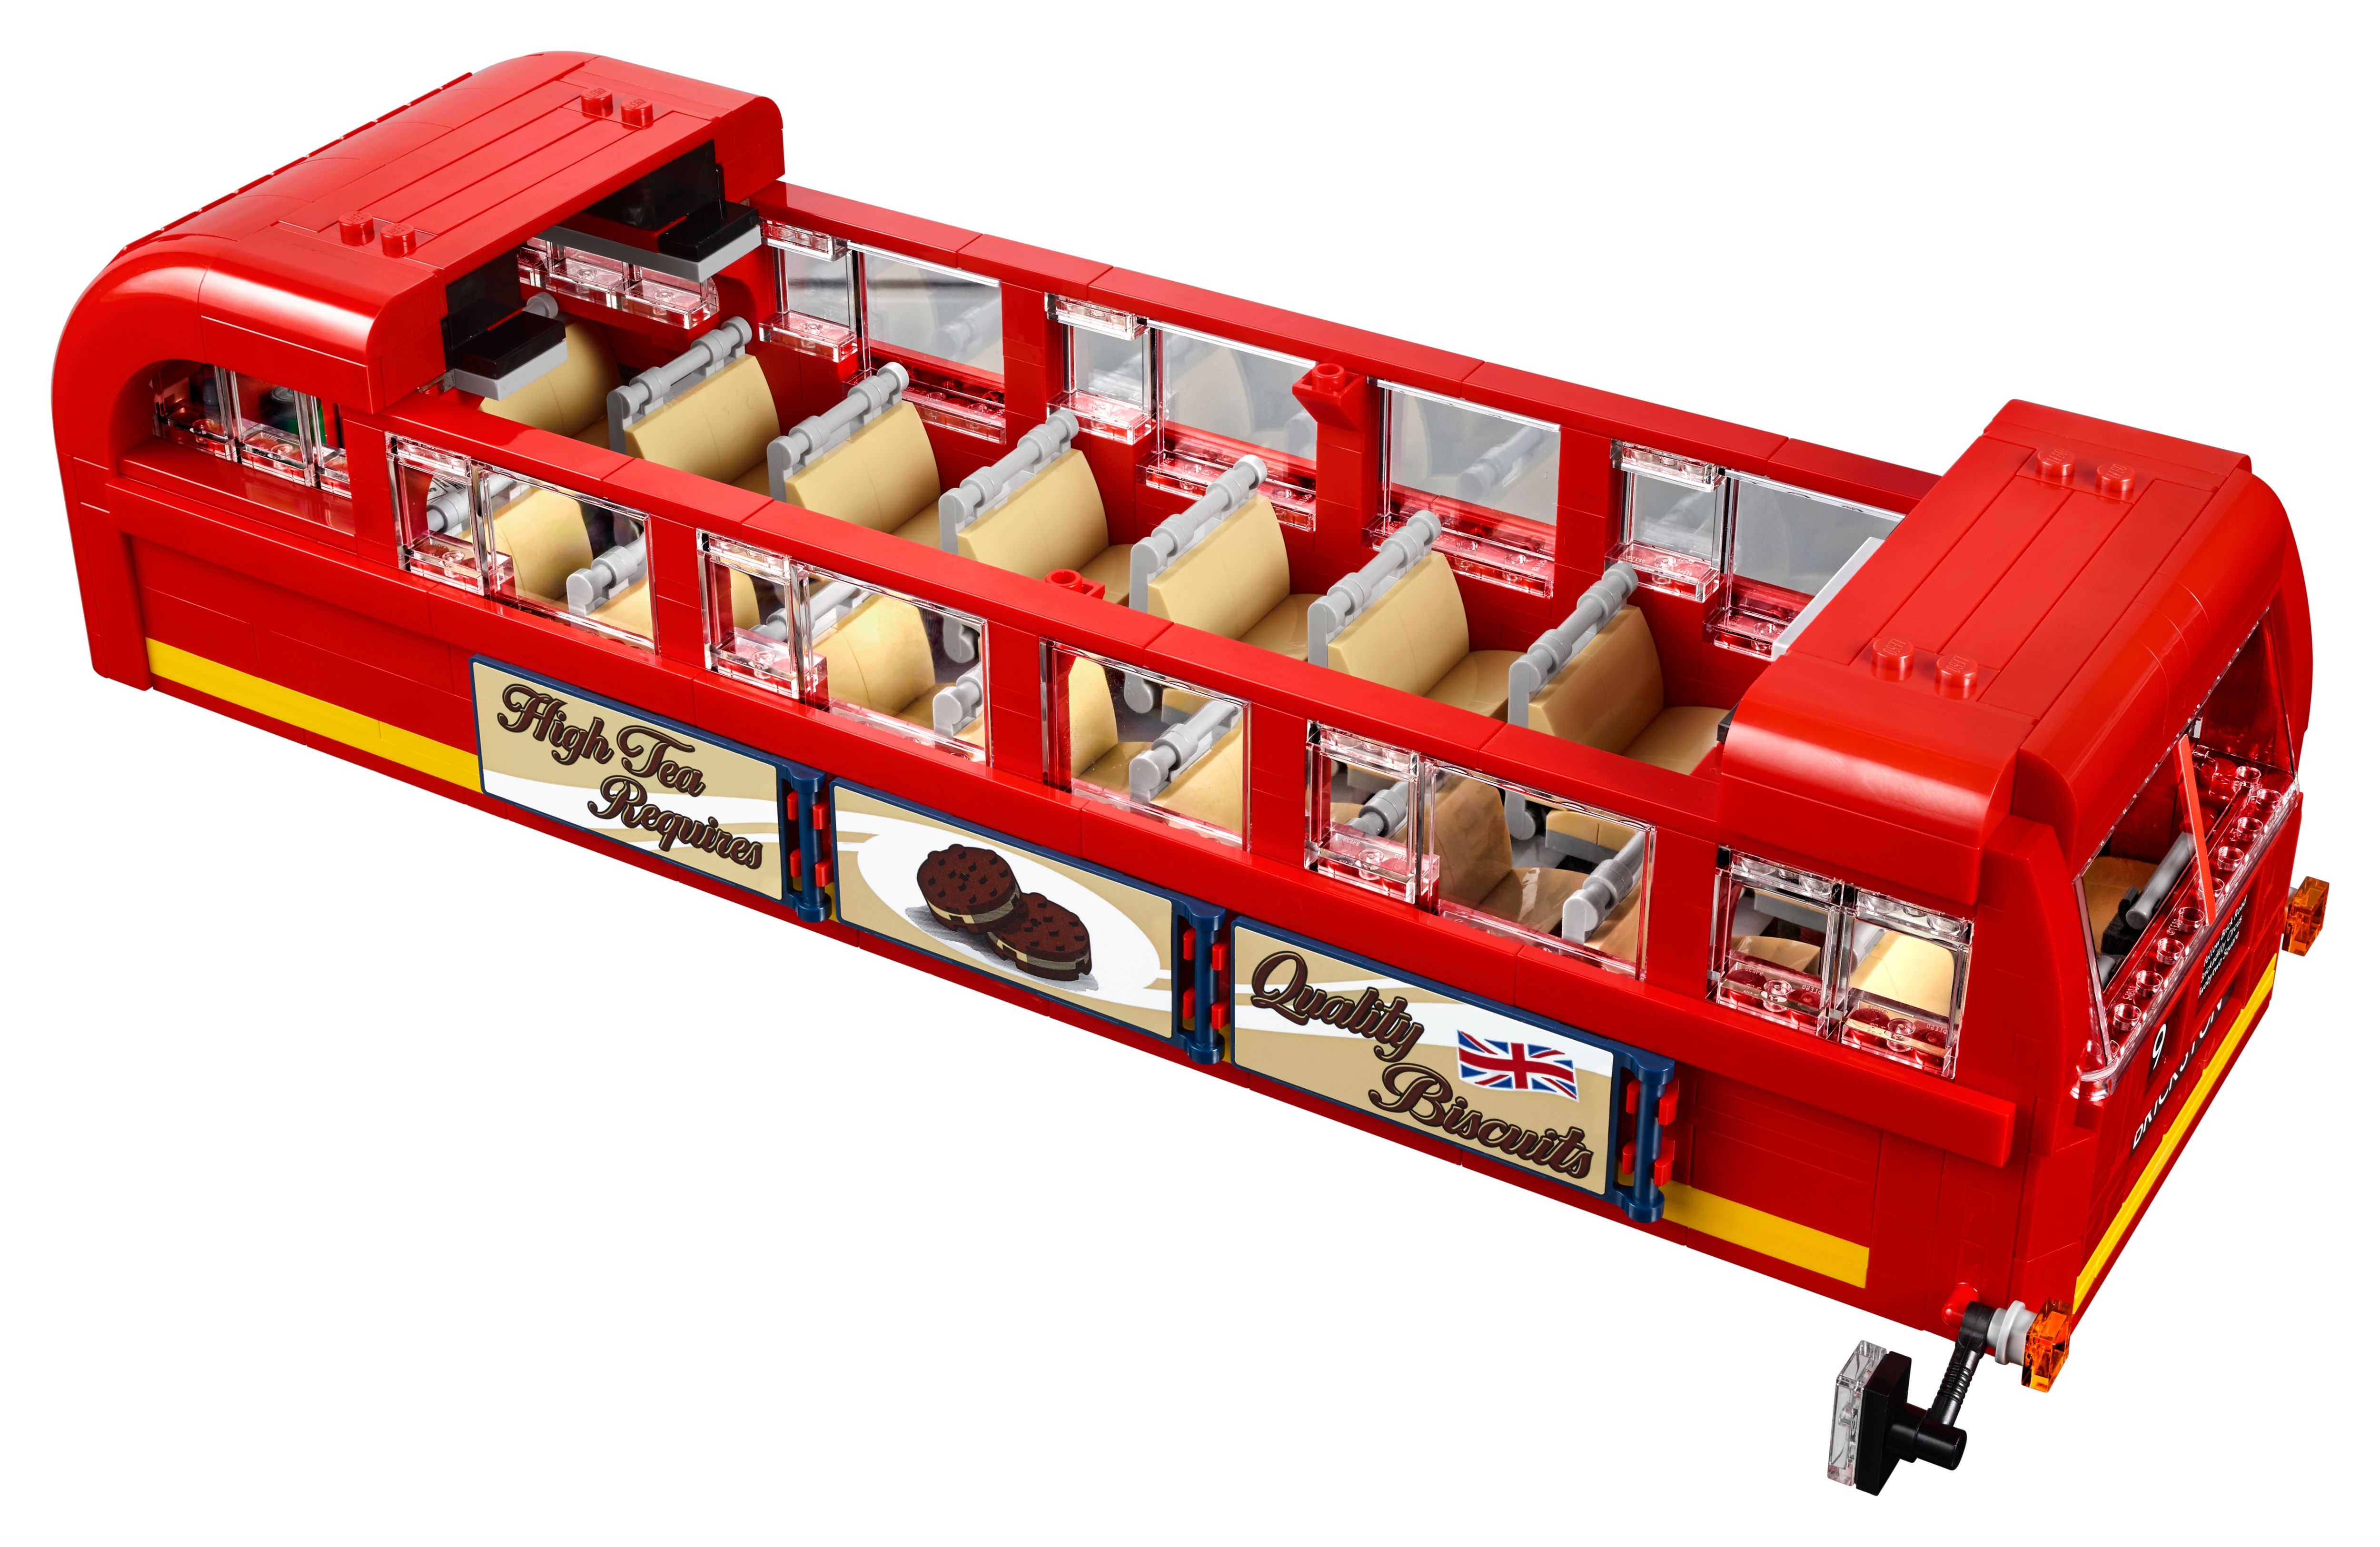 LEGO 10258 Creator London Bus Expert 1686 Pieces for sale online 